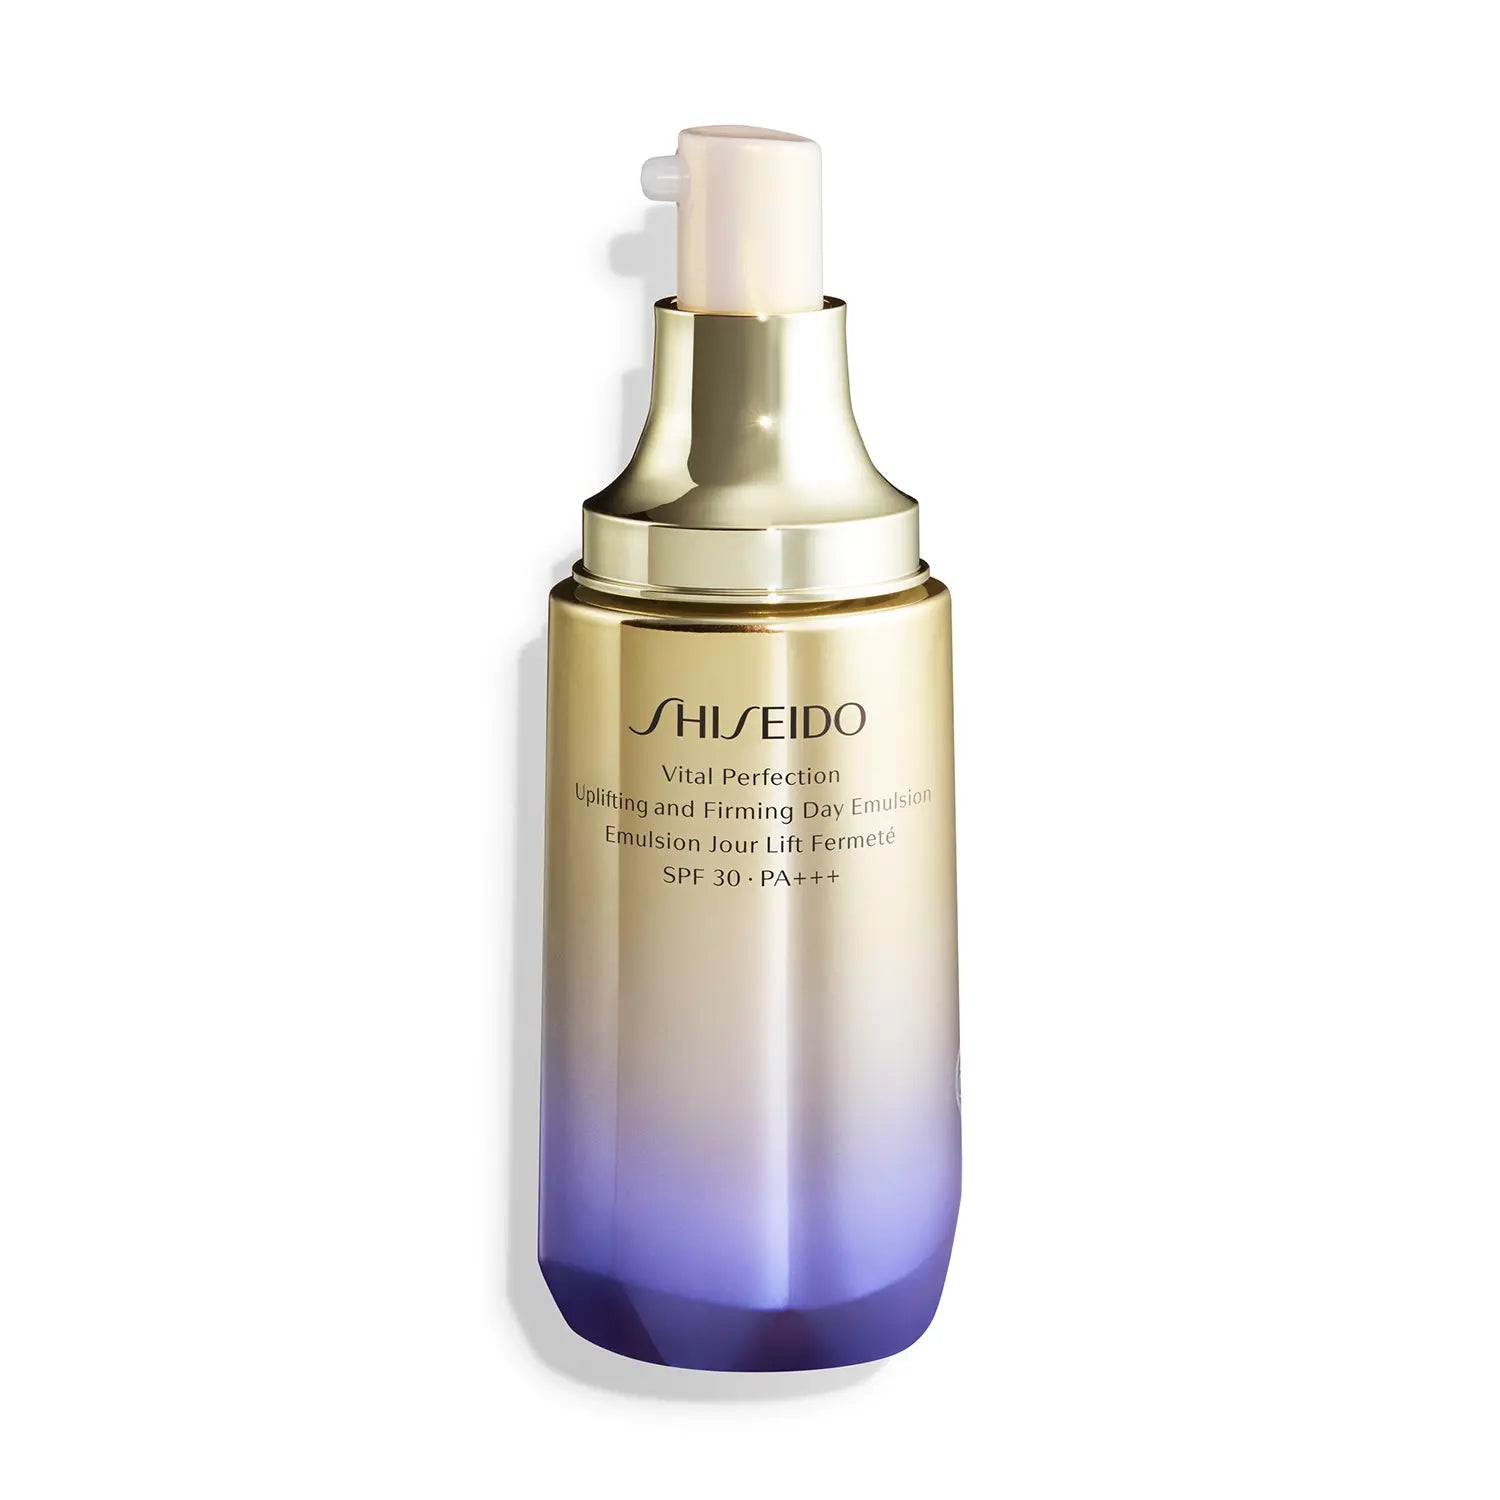 Shiseido Vital Perfection UL Firming Day Emulsion